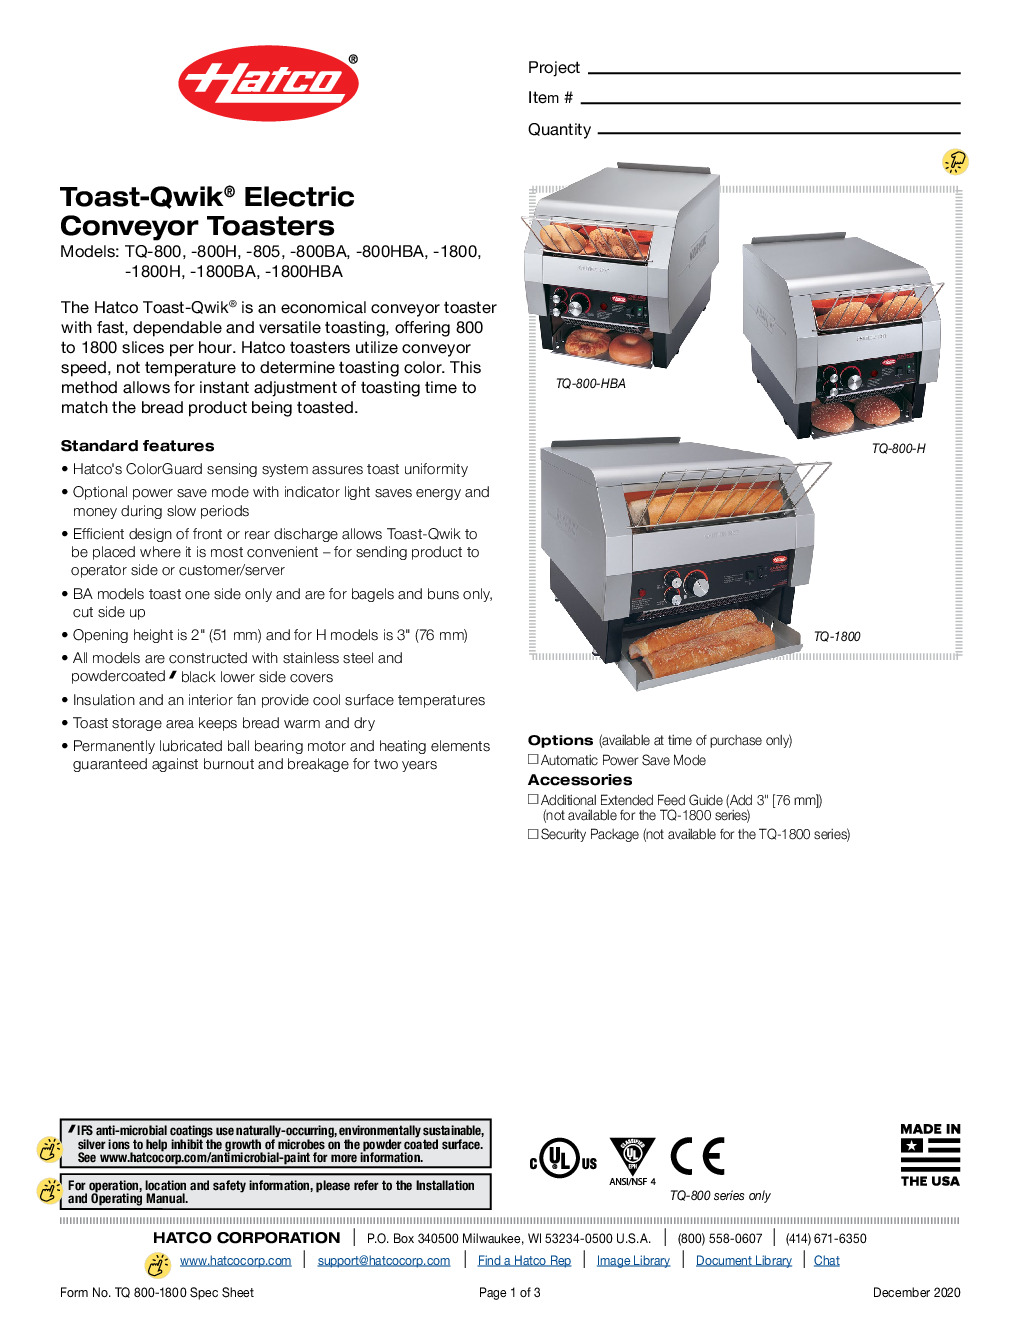 Hatco TQ-800H/BA Conveyor Type Toaster